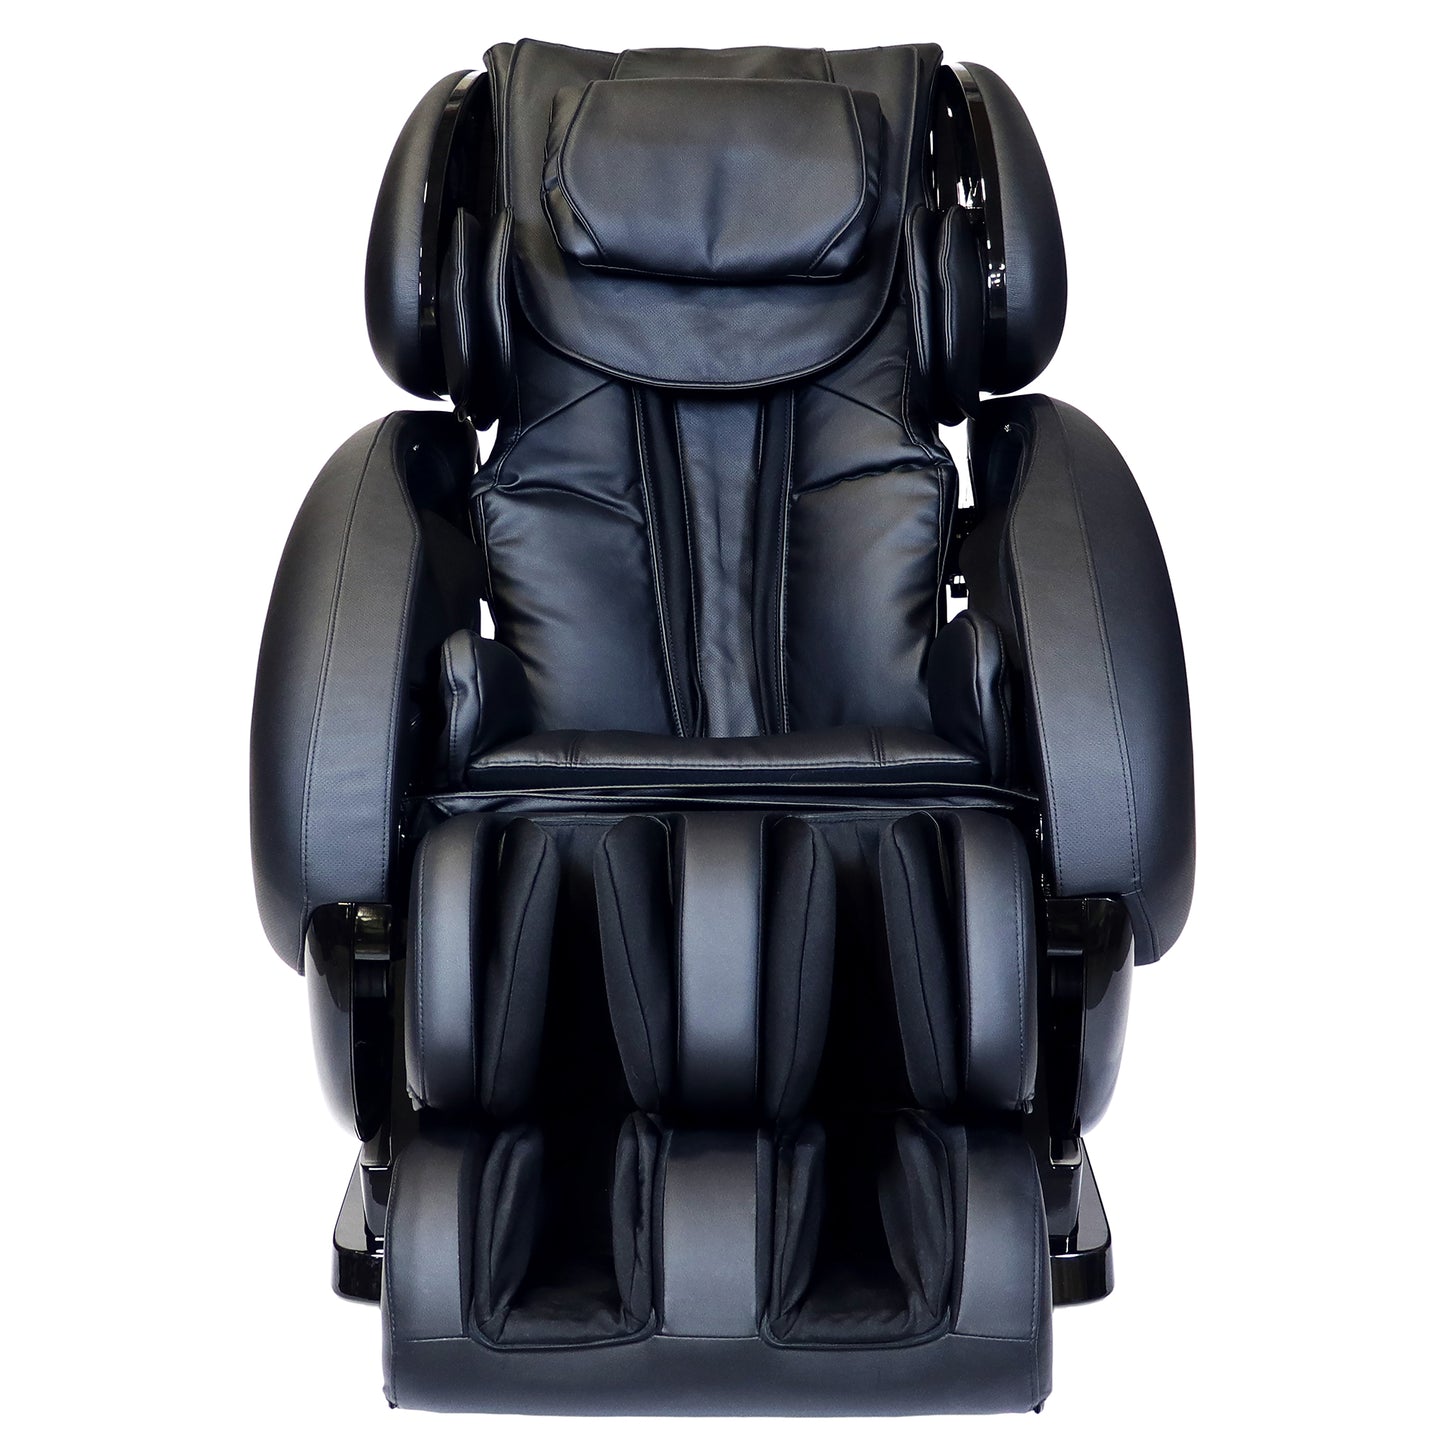 Infinity IT-8500™ Plus Massage Chair